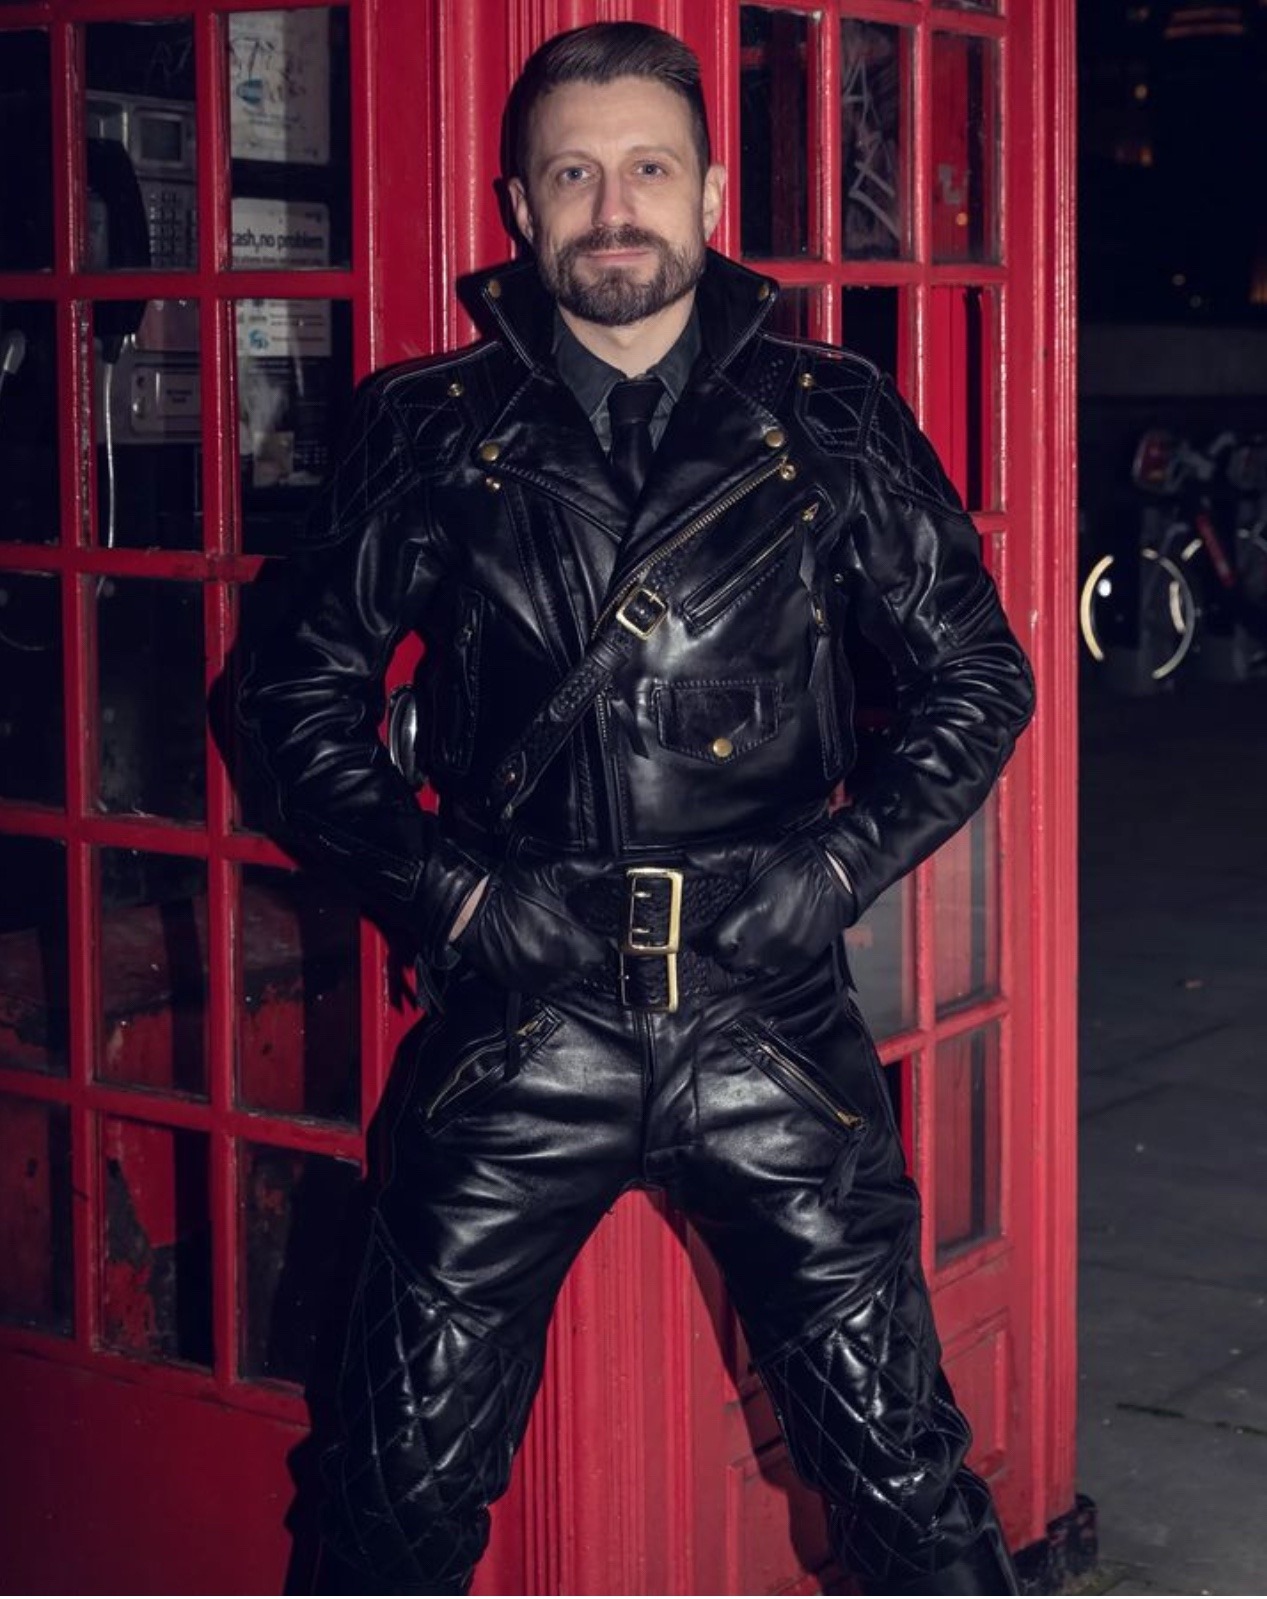 OMC on Tumblr: Insta: london_leather_guy